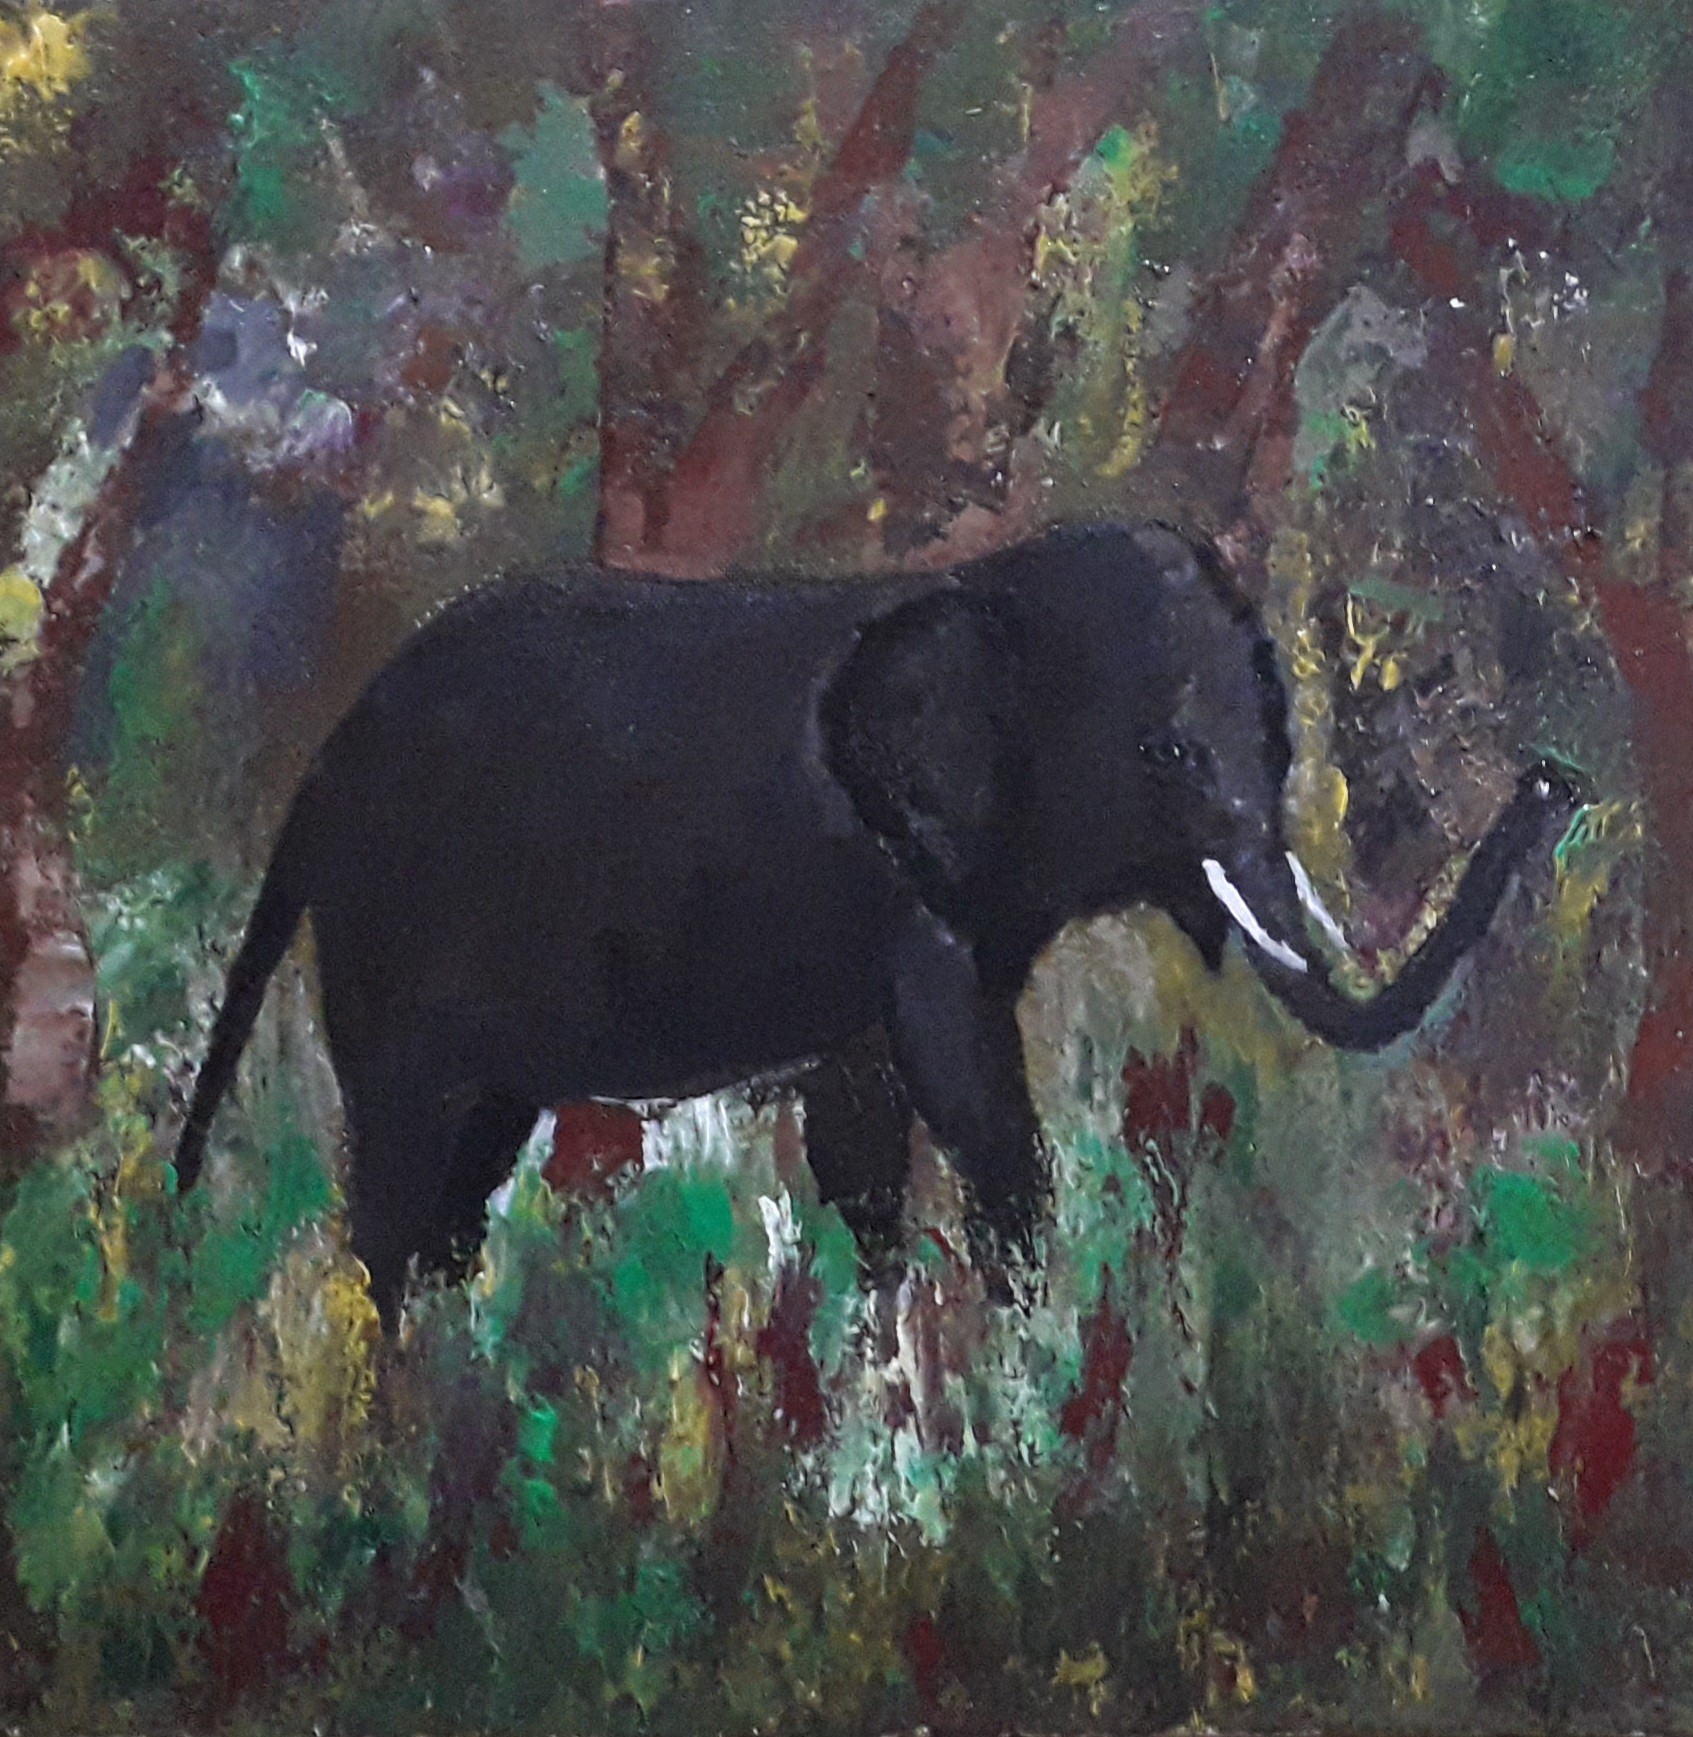 Sri Lankan Elephant by Simpson David